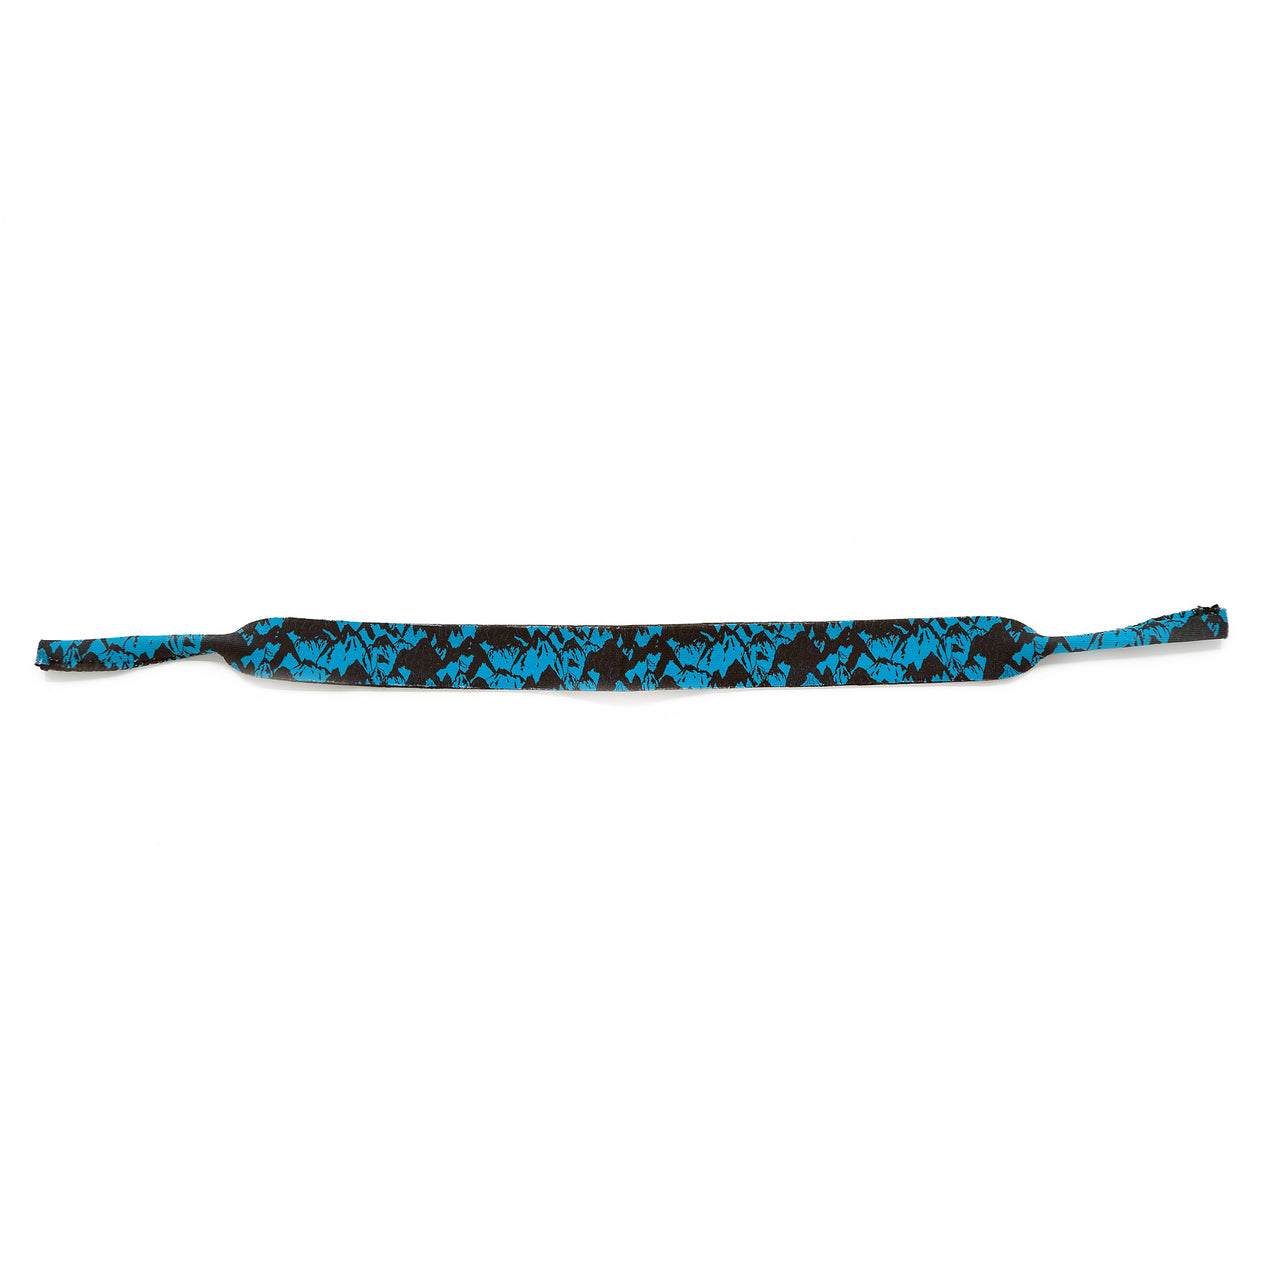 Sunglass strap in blue mountain neoprene fabric